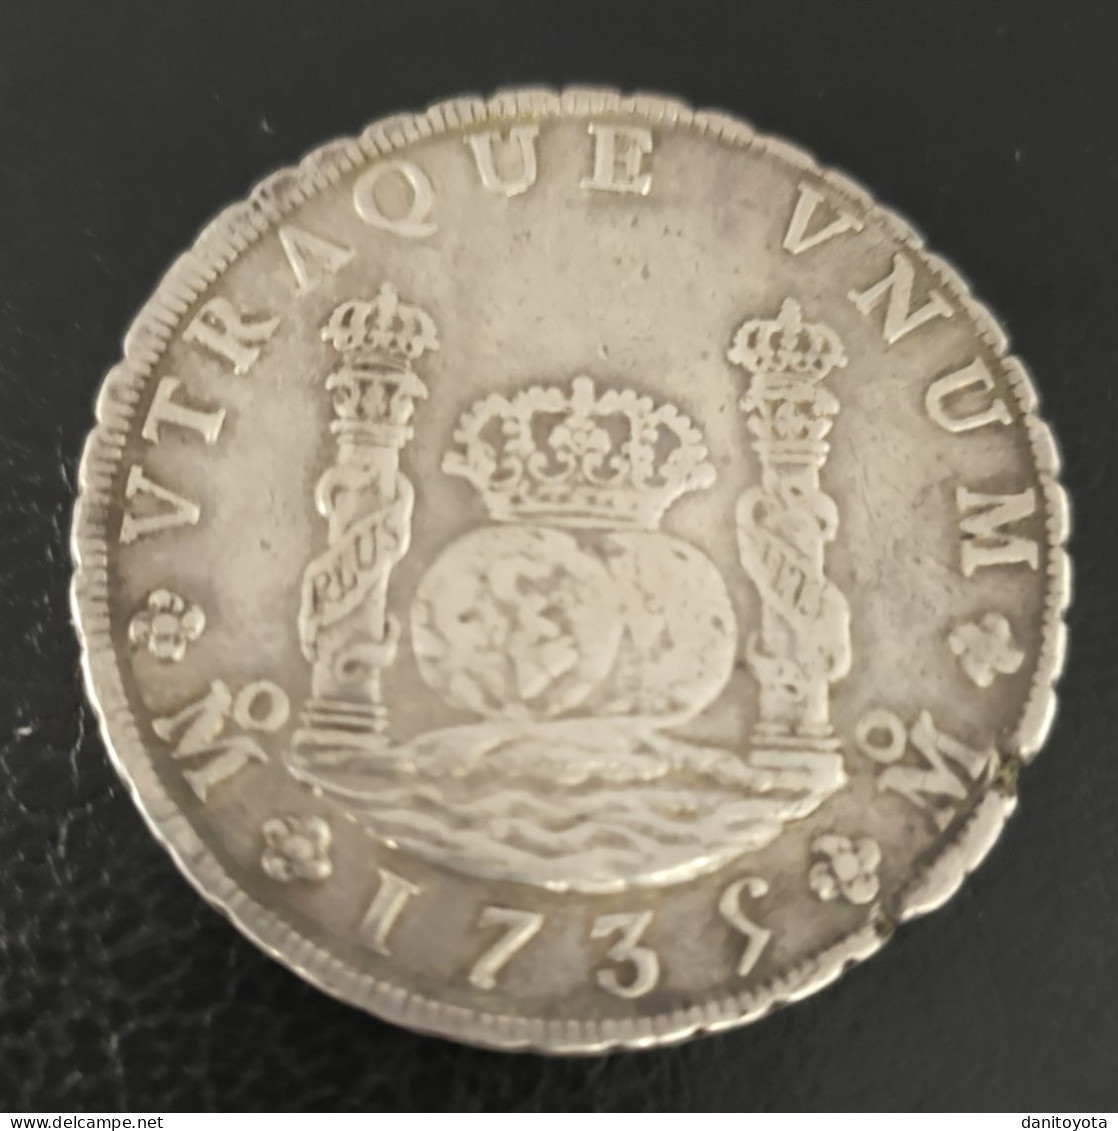 ESPAÑA. AÑO 1735. FELIPE V.  8 REALES PLATA MEXICO MF. PESO 26.9 GR.  REF A/F - Monedas Provinciales